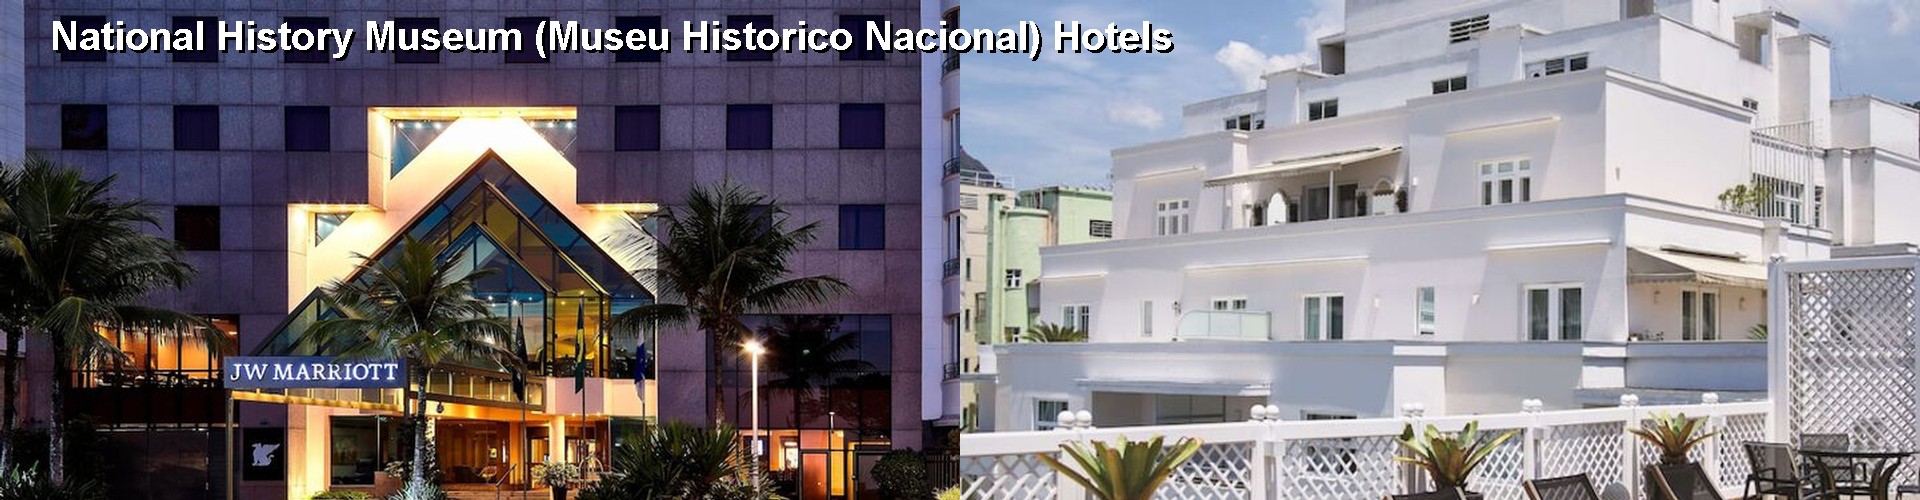 5 Best Hotels near National History Museum (Museu Historico Nacional)